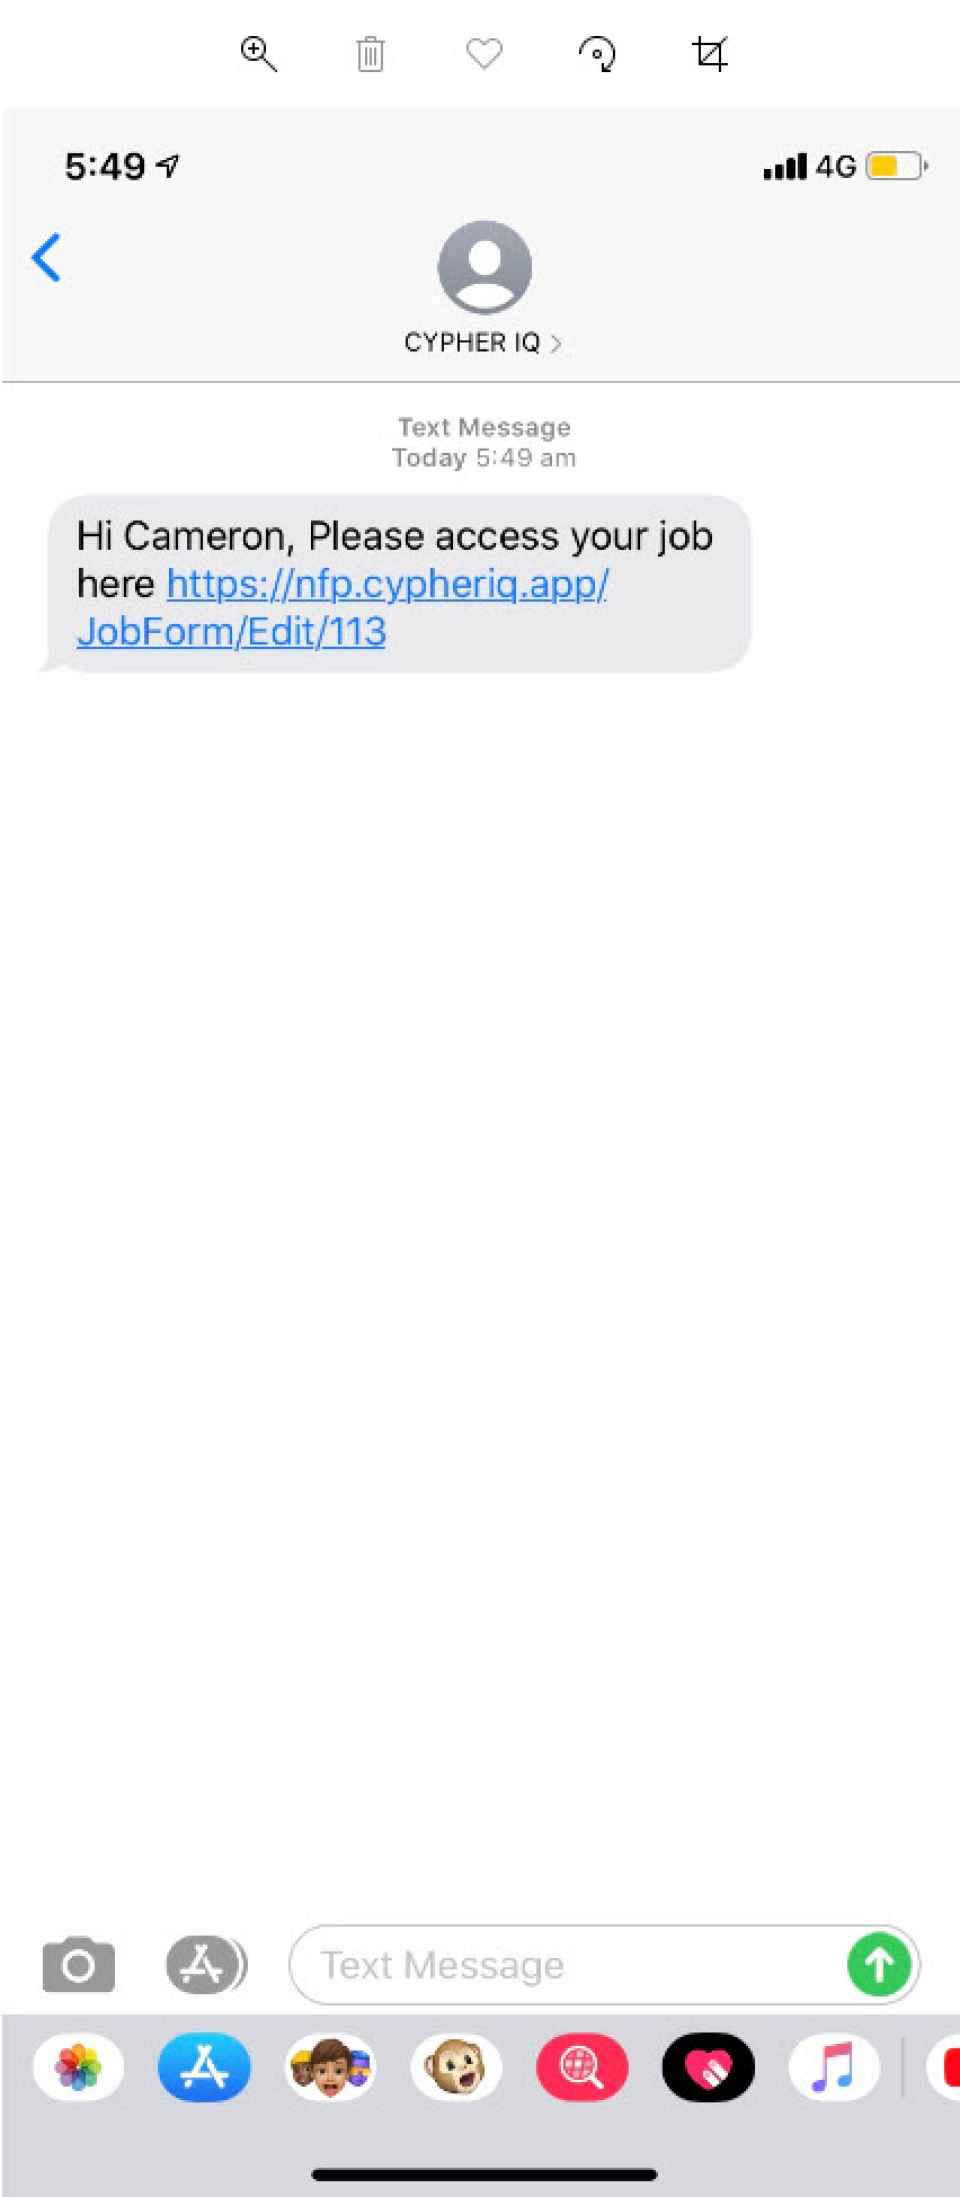 Cypher IQ custom SMS notifications